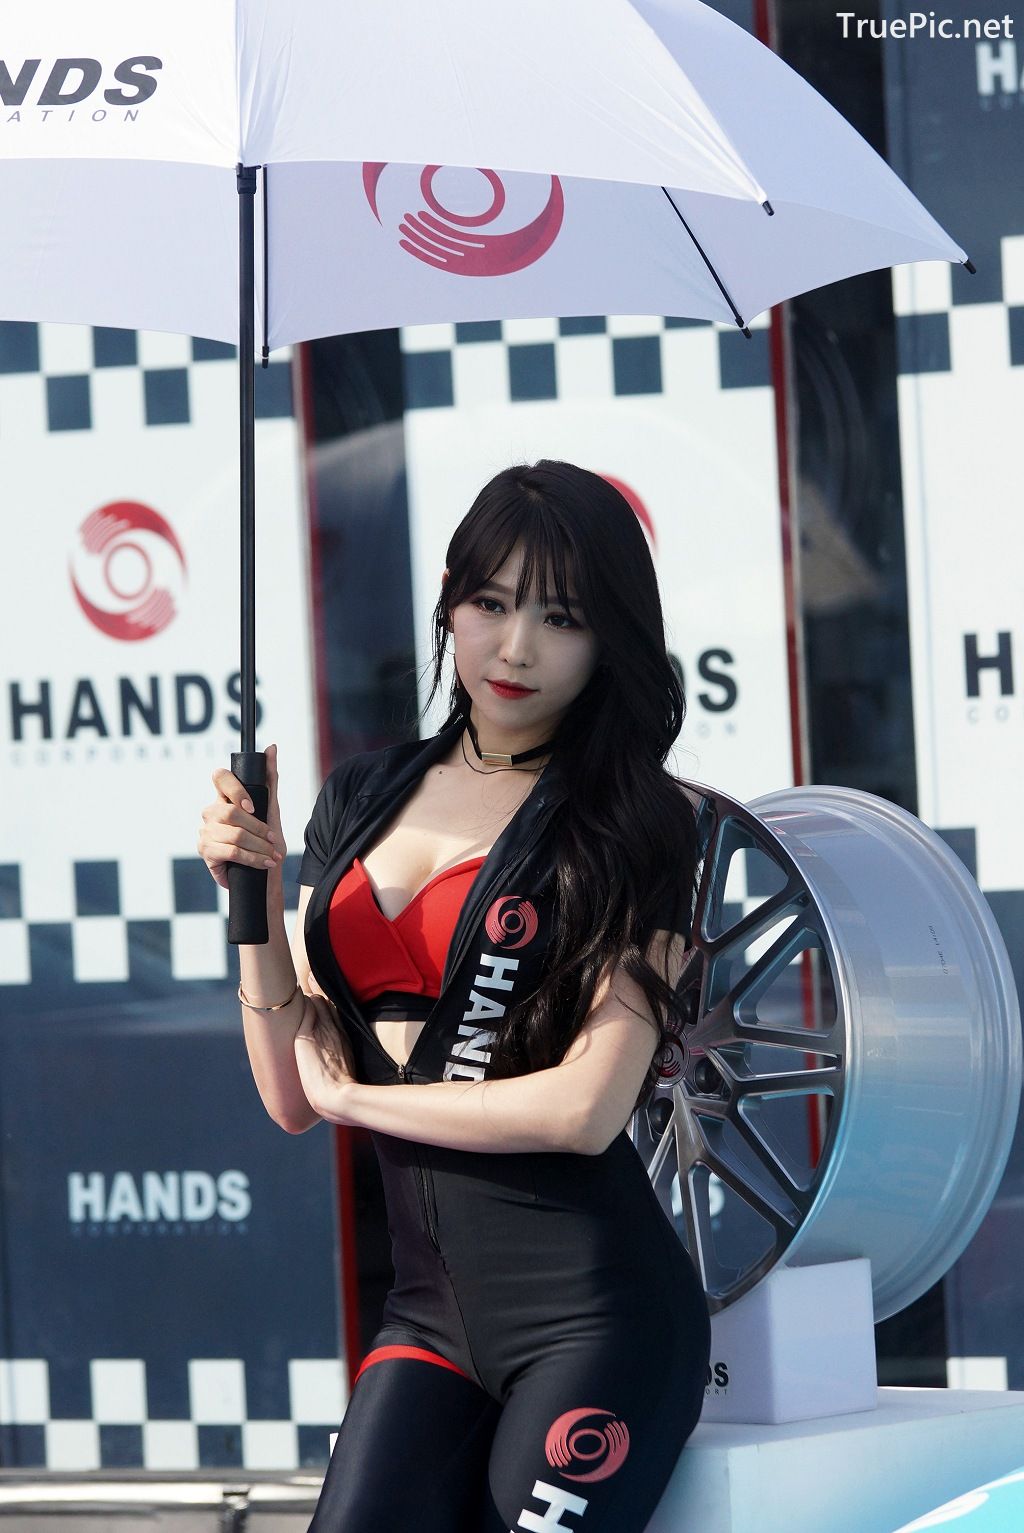 Image-Korean-Racing-Model-Lee-Eun-Hye-At-Incheon-Korea-Tuning-Festival-TruePic.net- Picture-21